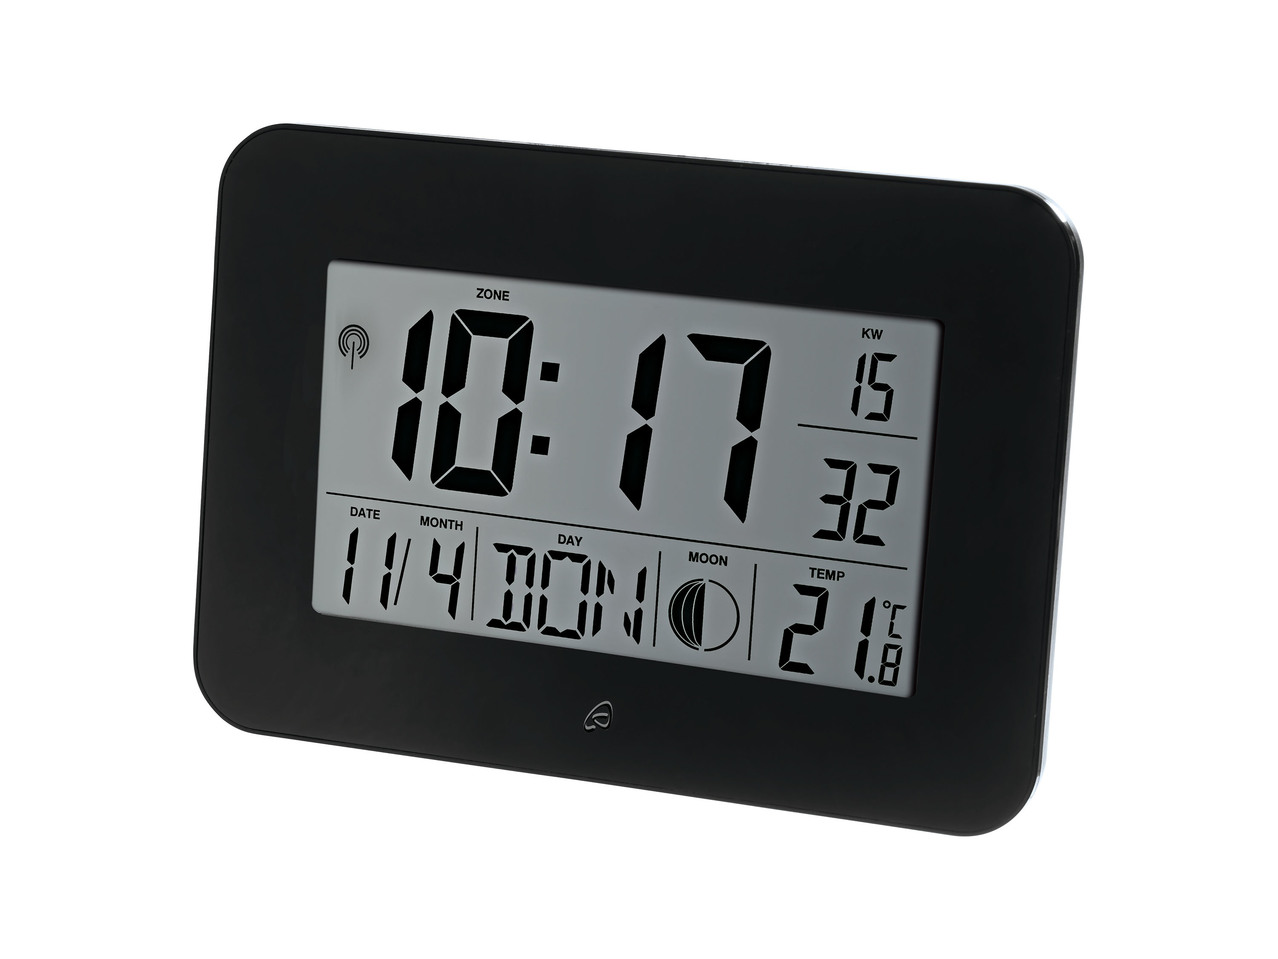 Radio Controlled LCD Clock